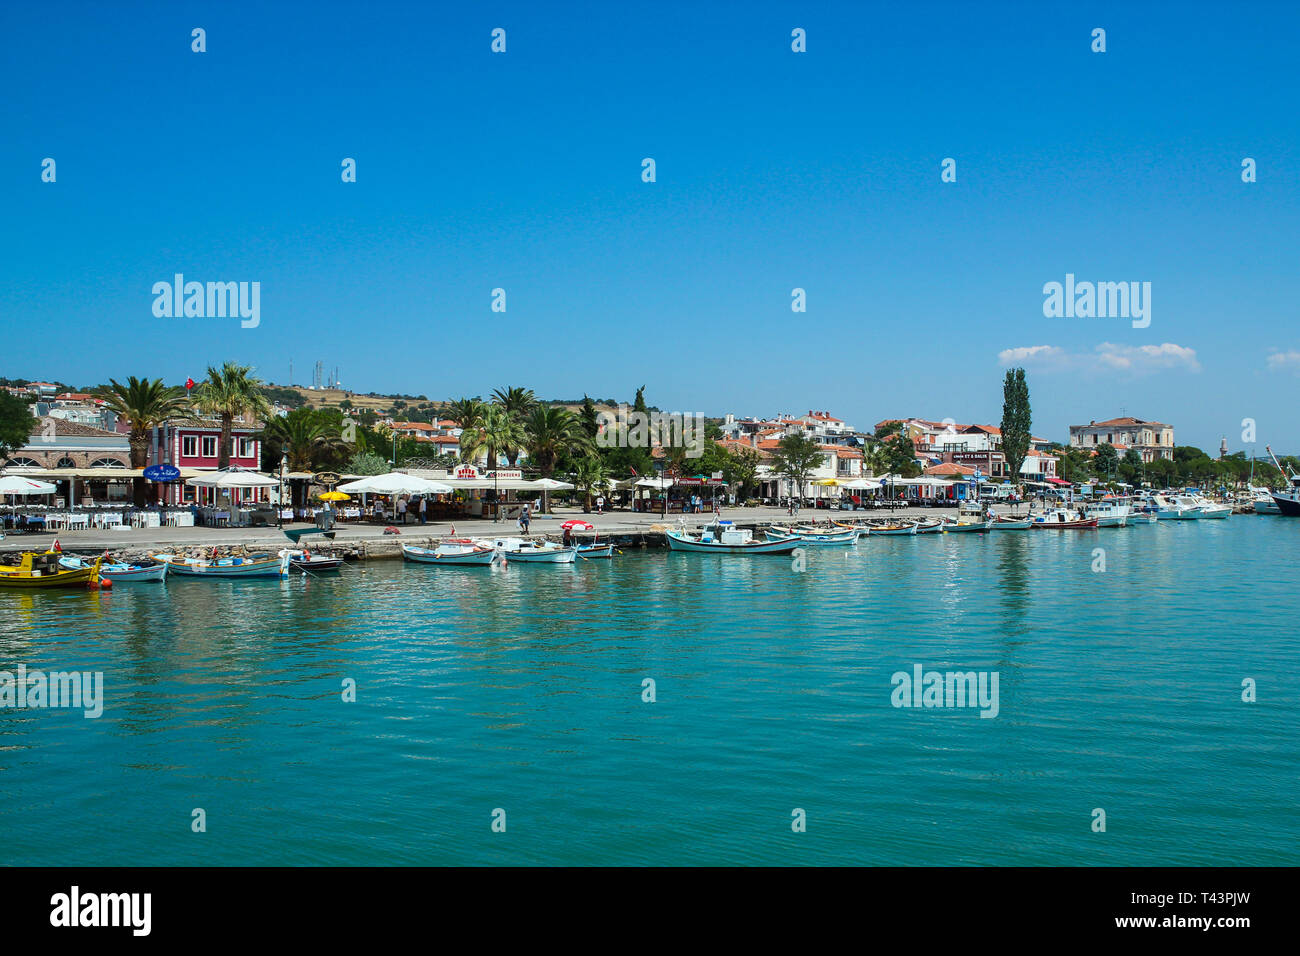 Cunda (alibey) Insel, Ayvalik, Balikesir/Türkei - 8. Juli 2015: Ayvalik Insel Cunda Ansicht vom Meer Stockfoto